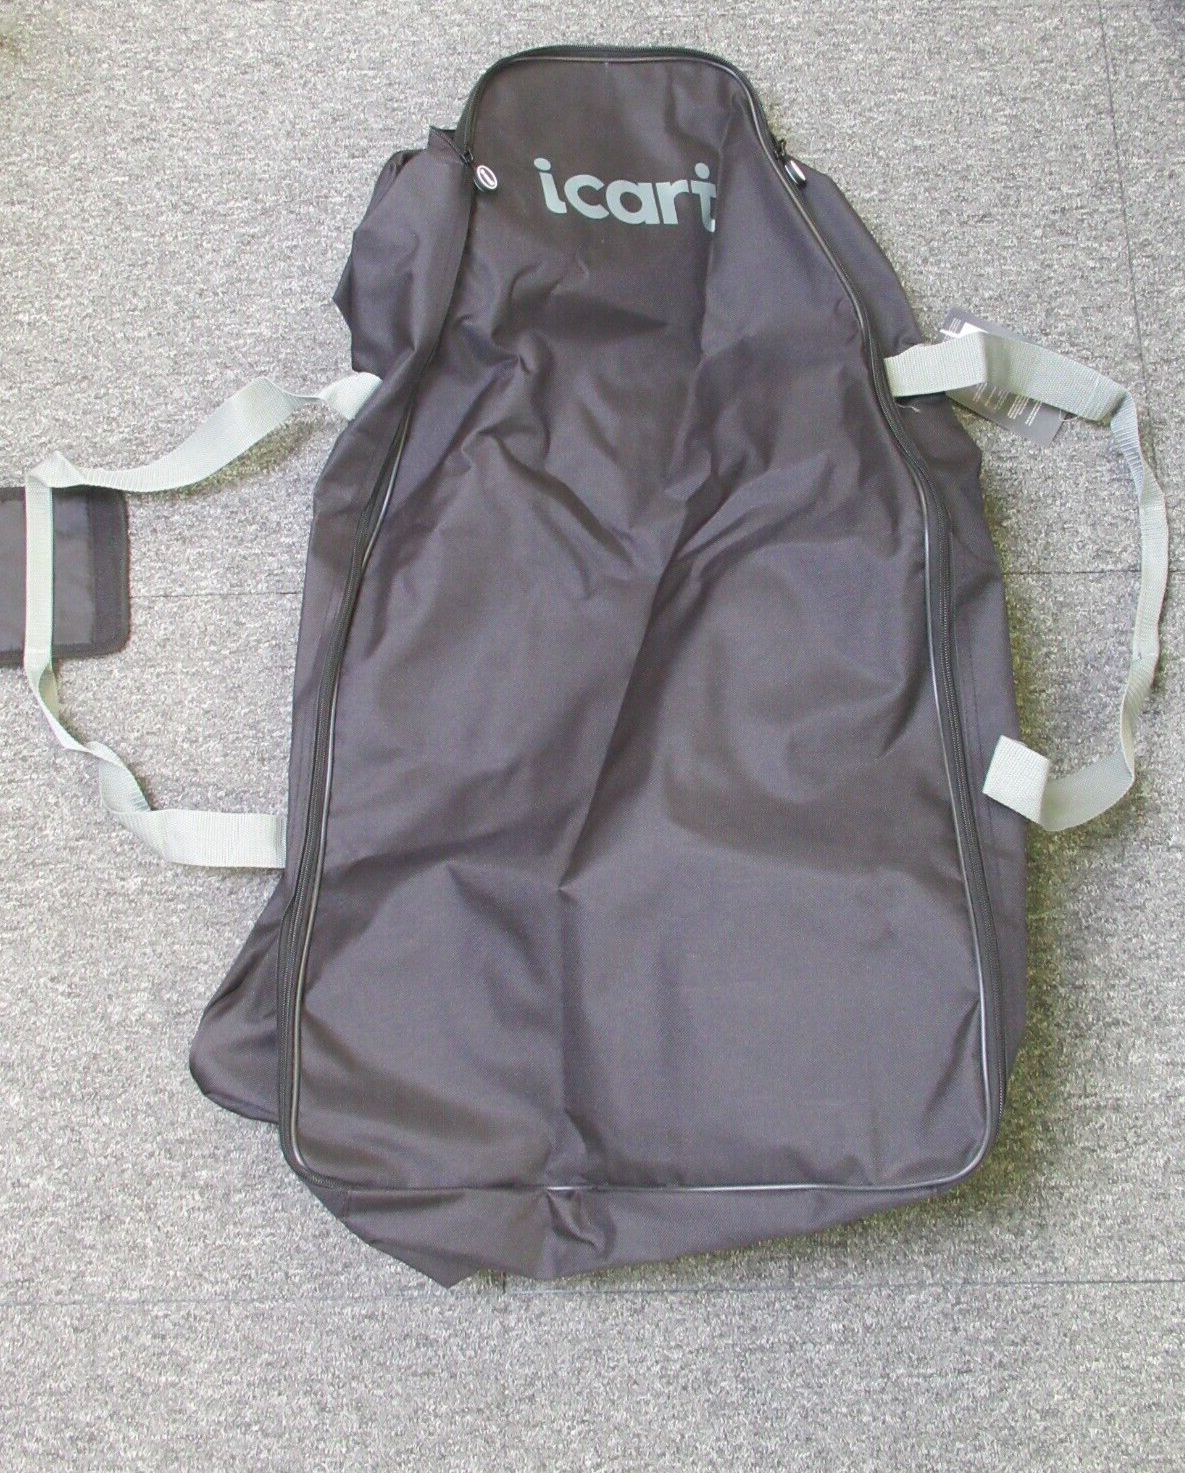 icart trolly storage bag